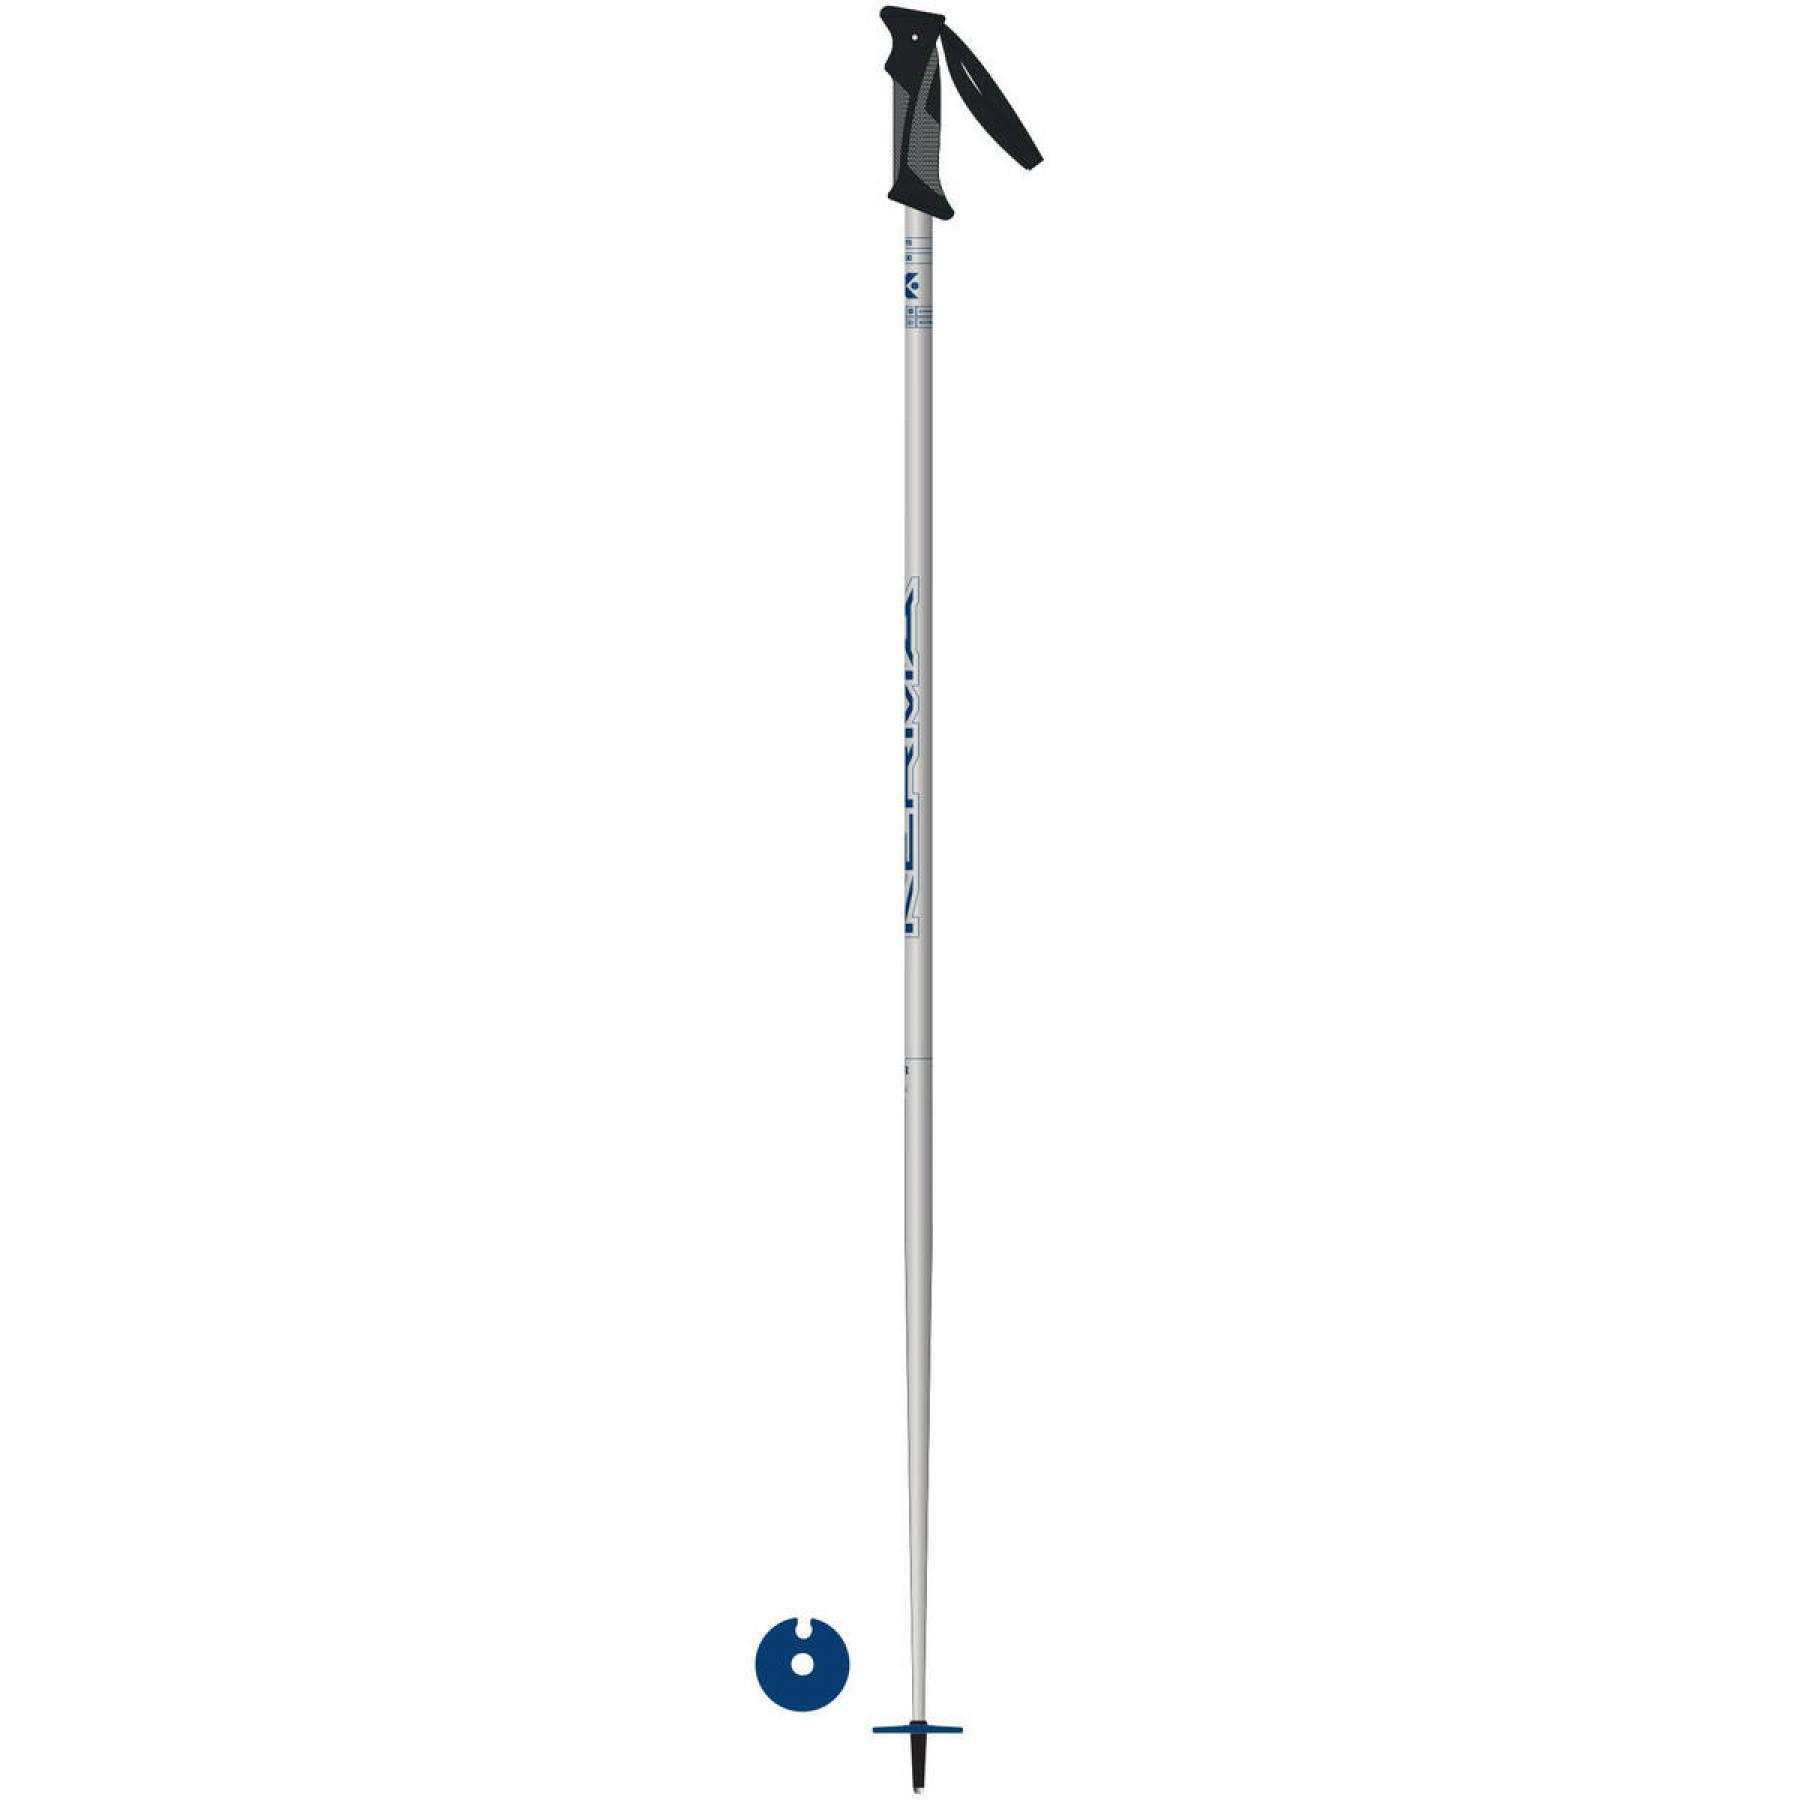 Ski poles Kerma vector